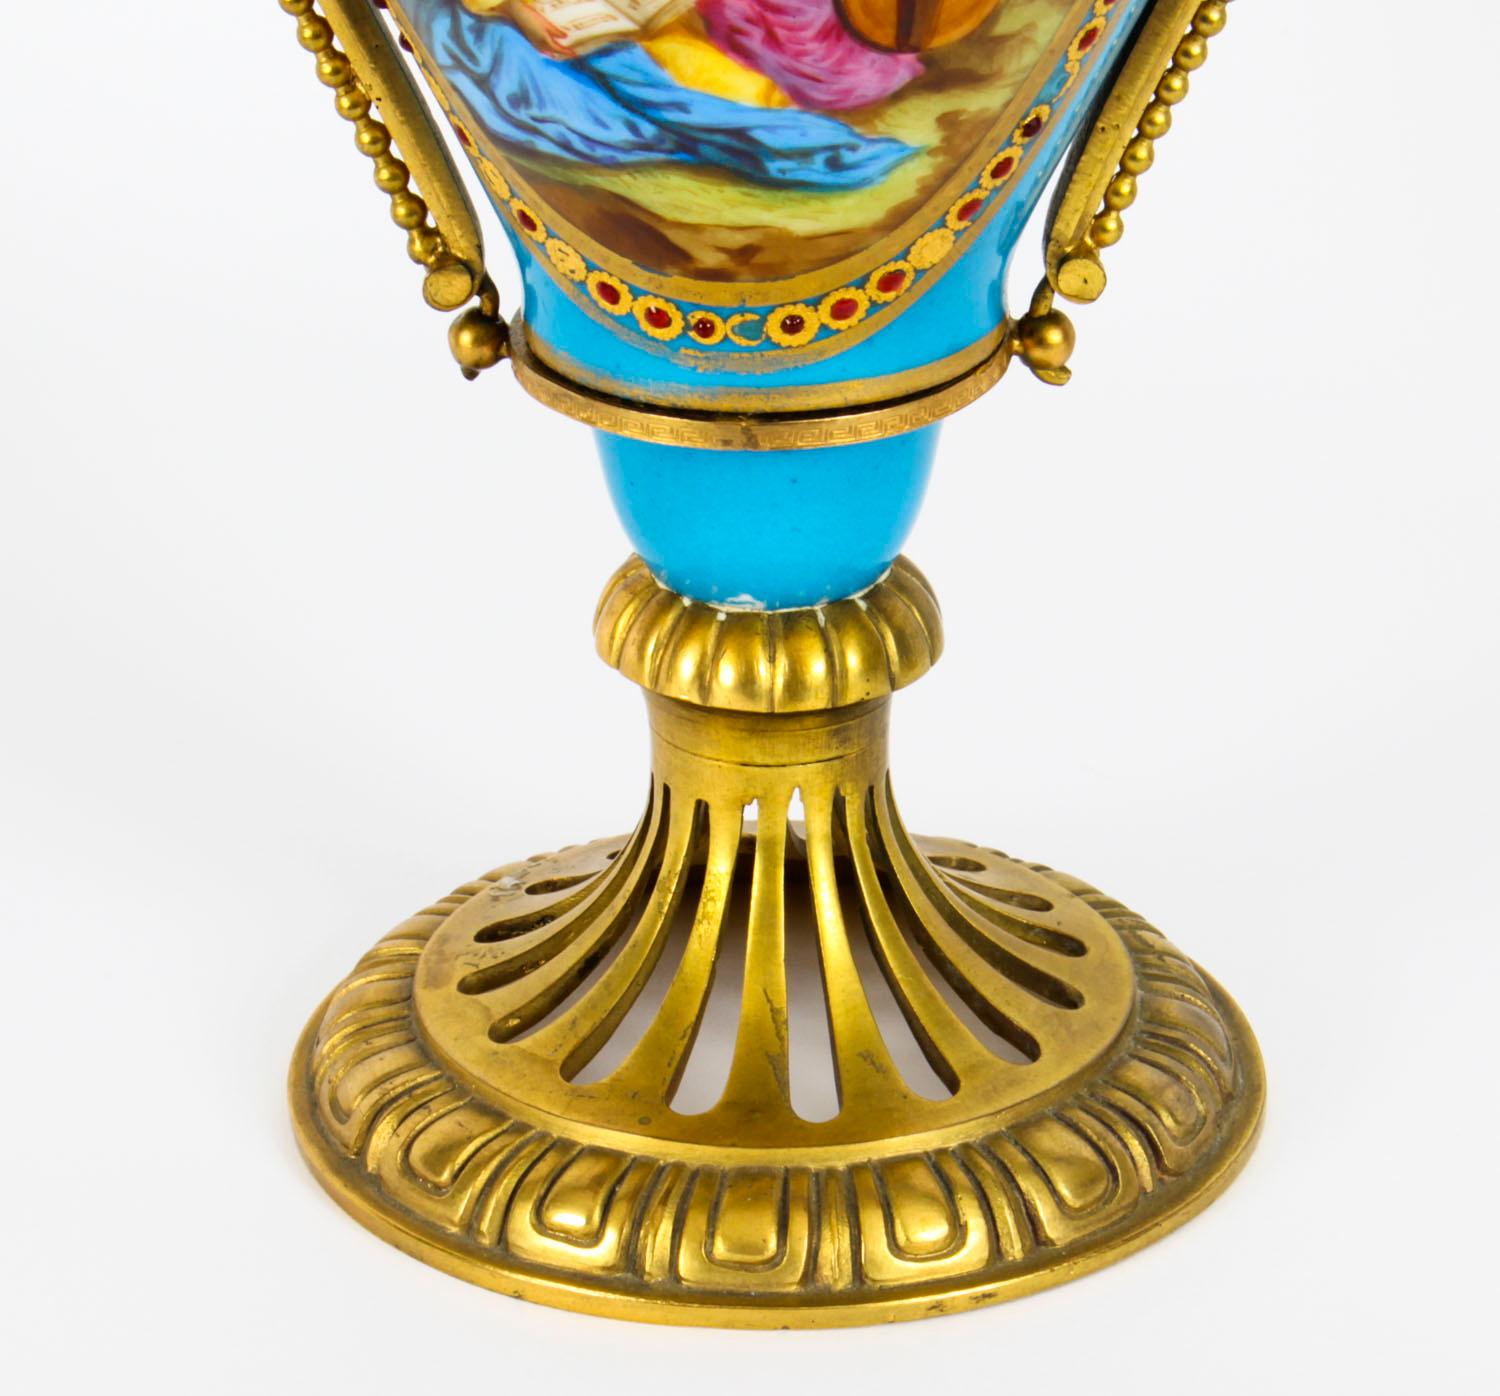 Antique Pair of French Ormolu Mounted Bleu Celeste Sèvres Vases, 19th Century For Sale 6